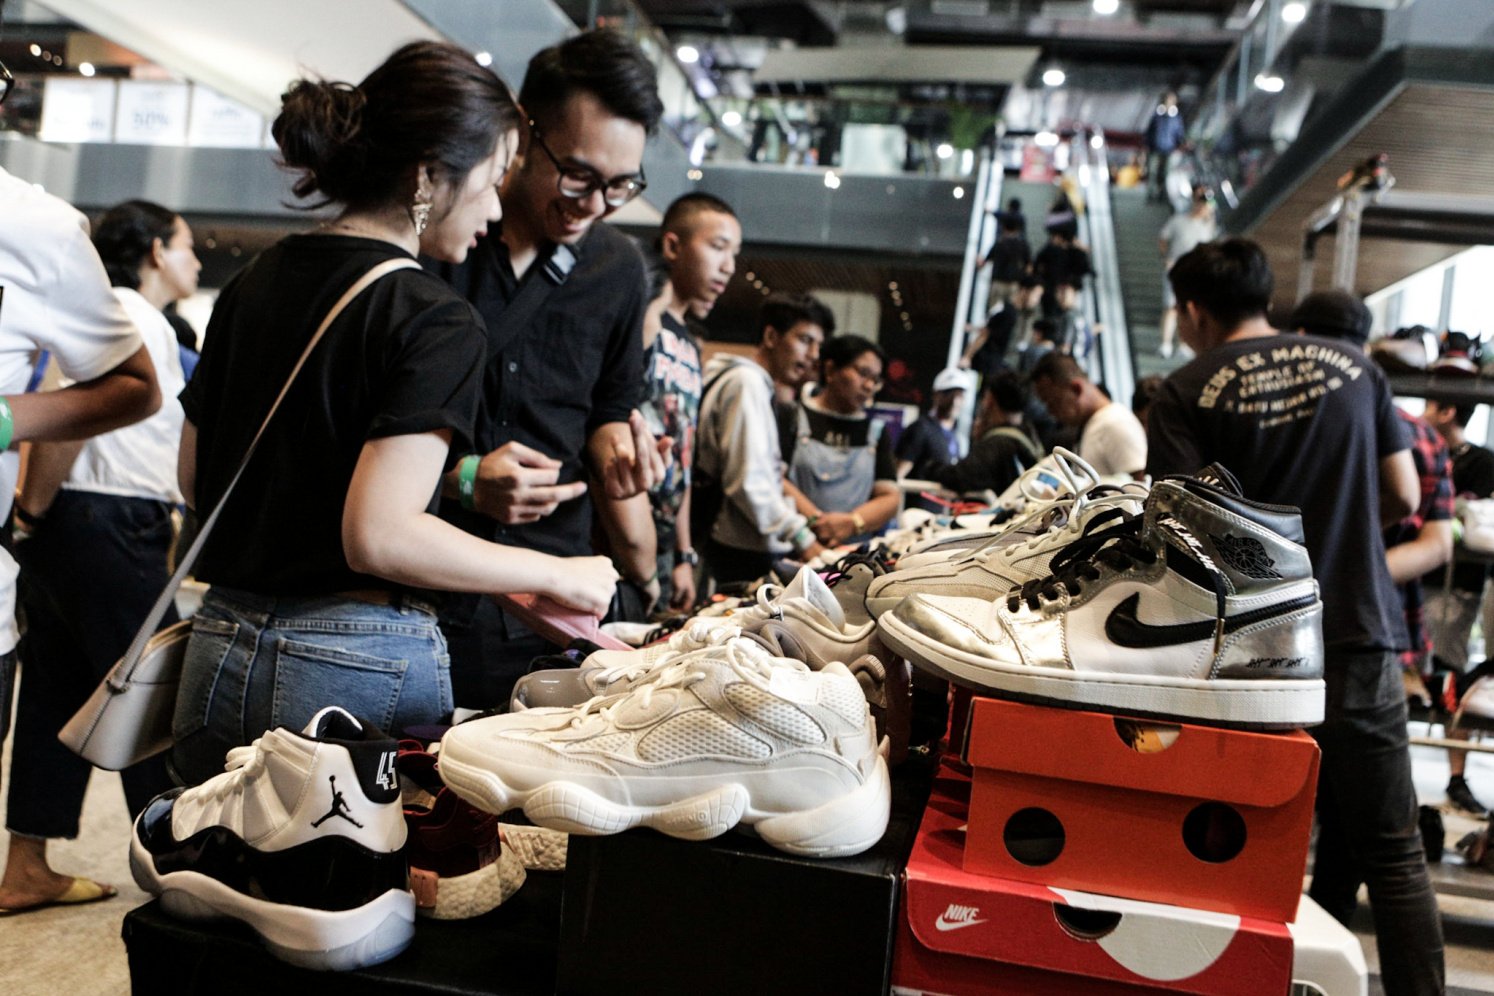 Pengunjung melihat sepatu di bazar Urban Sneaker Society di ke Plaza Gedung District 8, SCBD, Jakarta Selatan (08/11/2019). Terdapat beberapa brand sepatu yang merilis produk hasil kolaborasi eksklusifnya, diantaranya sepatu Compass, Untold, Rafheoo Footwear, hingga G-Shock. Selain itu, ada pula kolaborasi eksklusif seperti ublic Culture, FR2 (Fxxcking Rabbit), Atmos, hingga Round Two by Sean Wotherspoon.